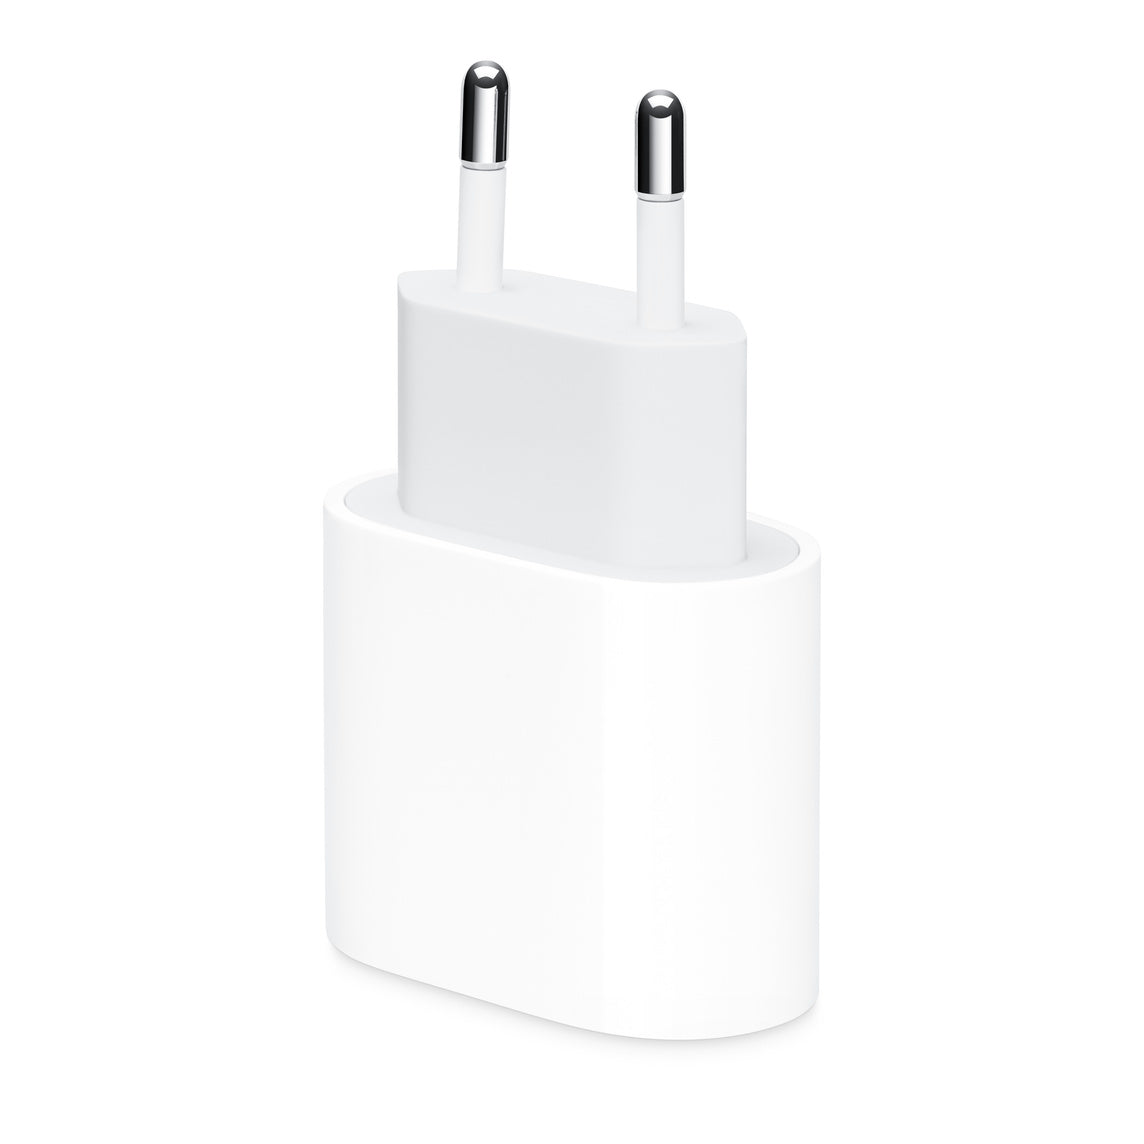 Apple USB-C 20W power adapter